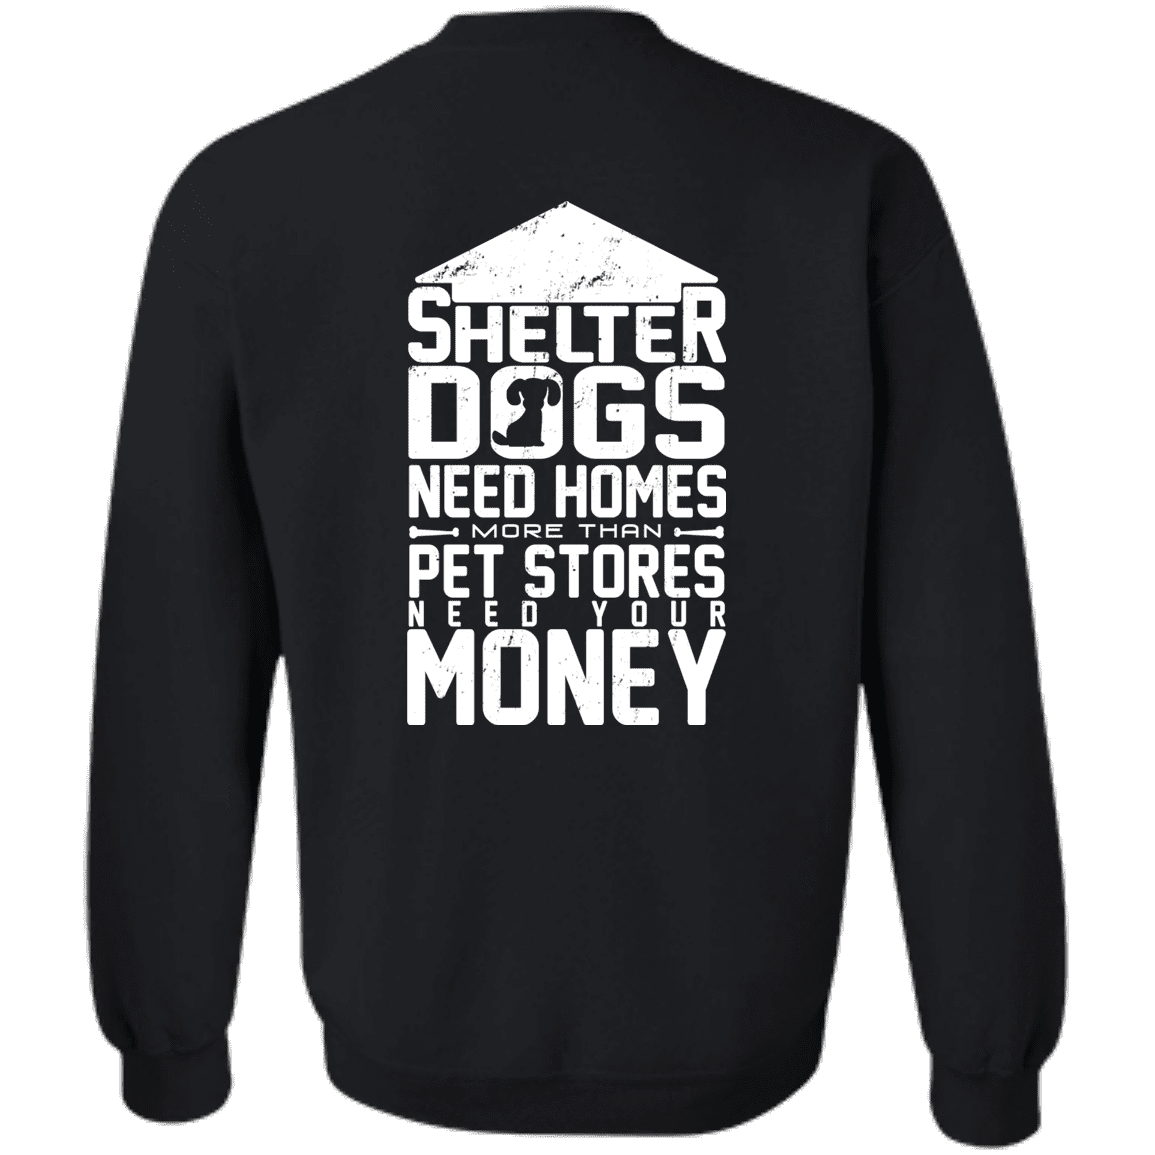 Shelter Dogs Need Homes - Sweatshirt.